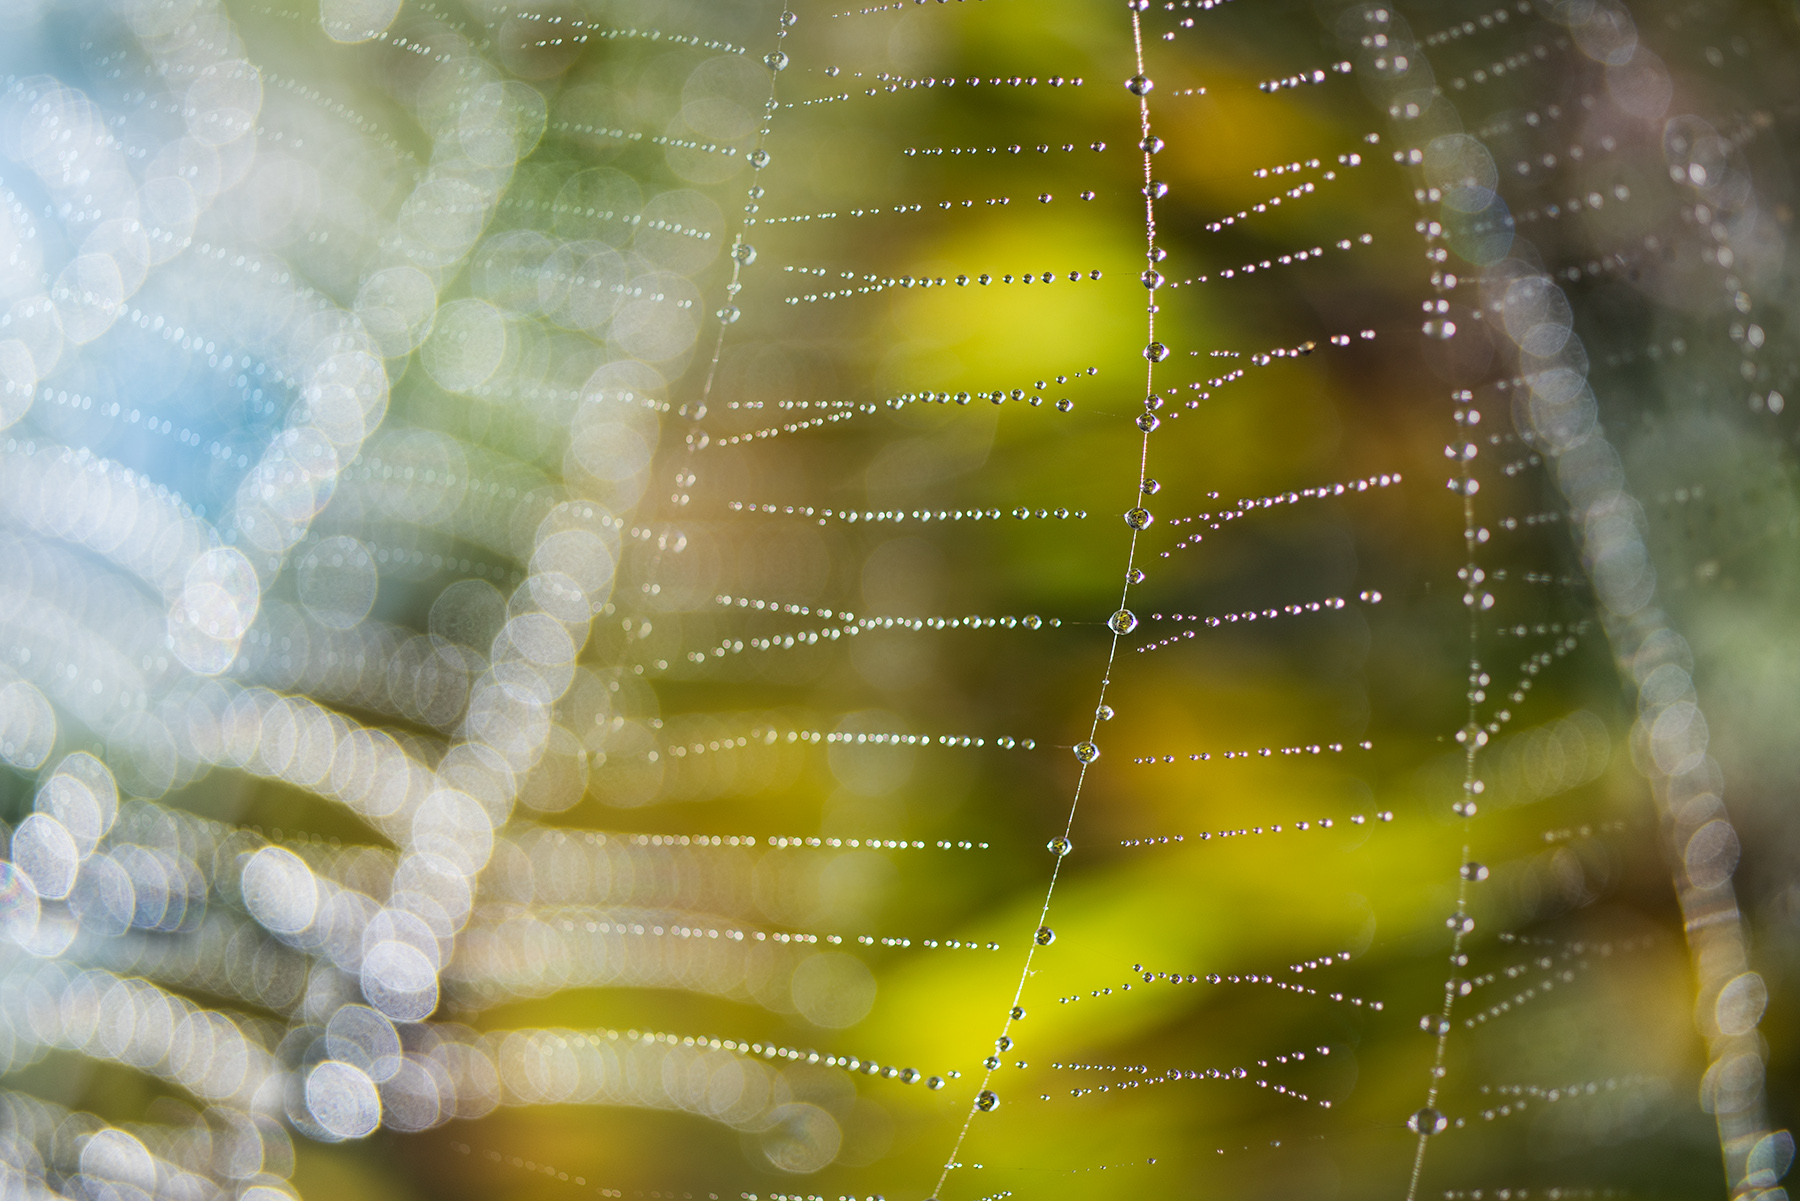 Wet Spider Web 2 © Harold Davis